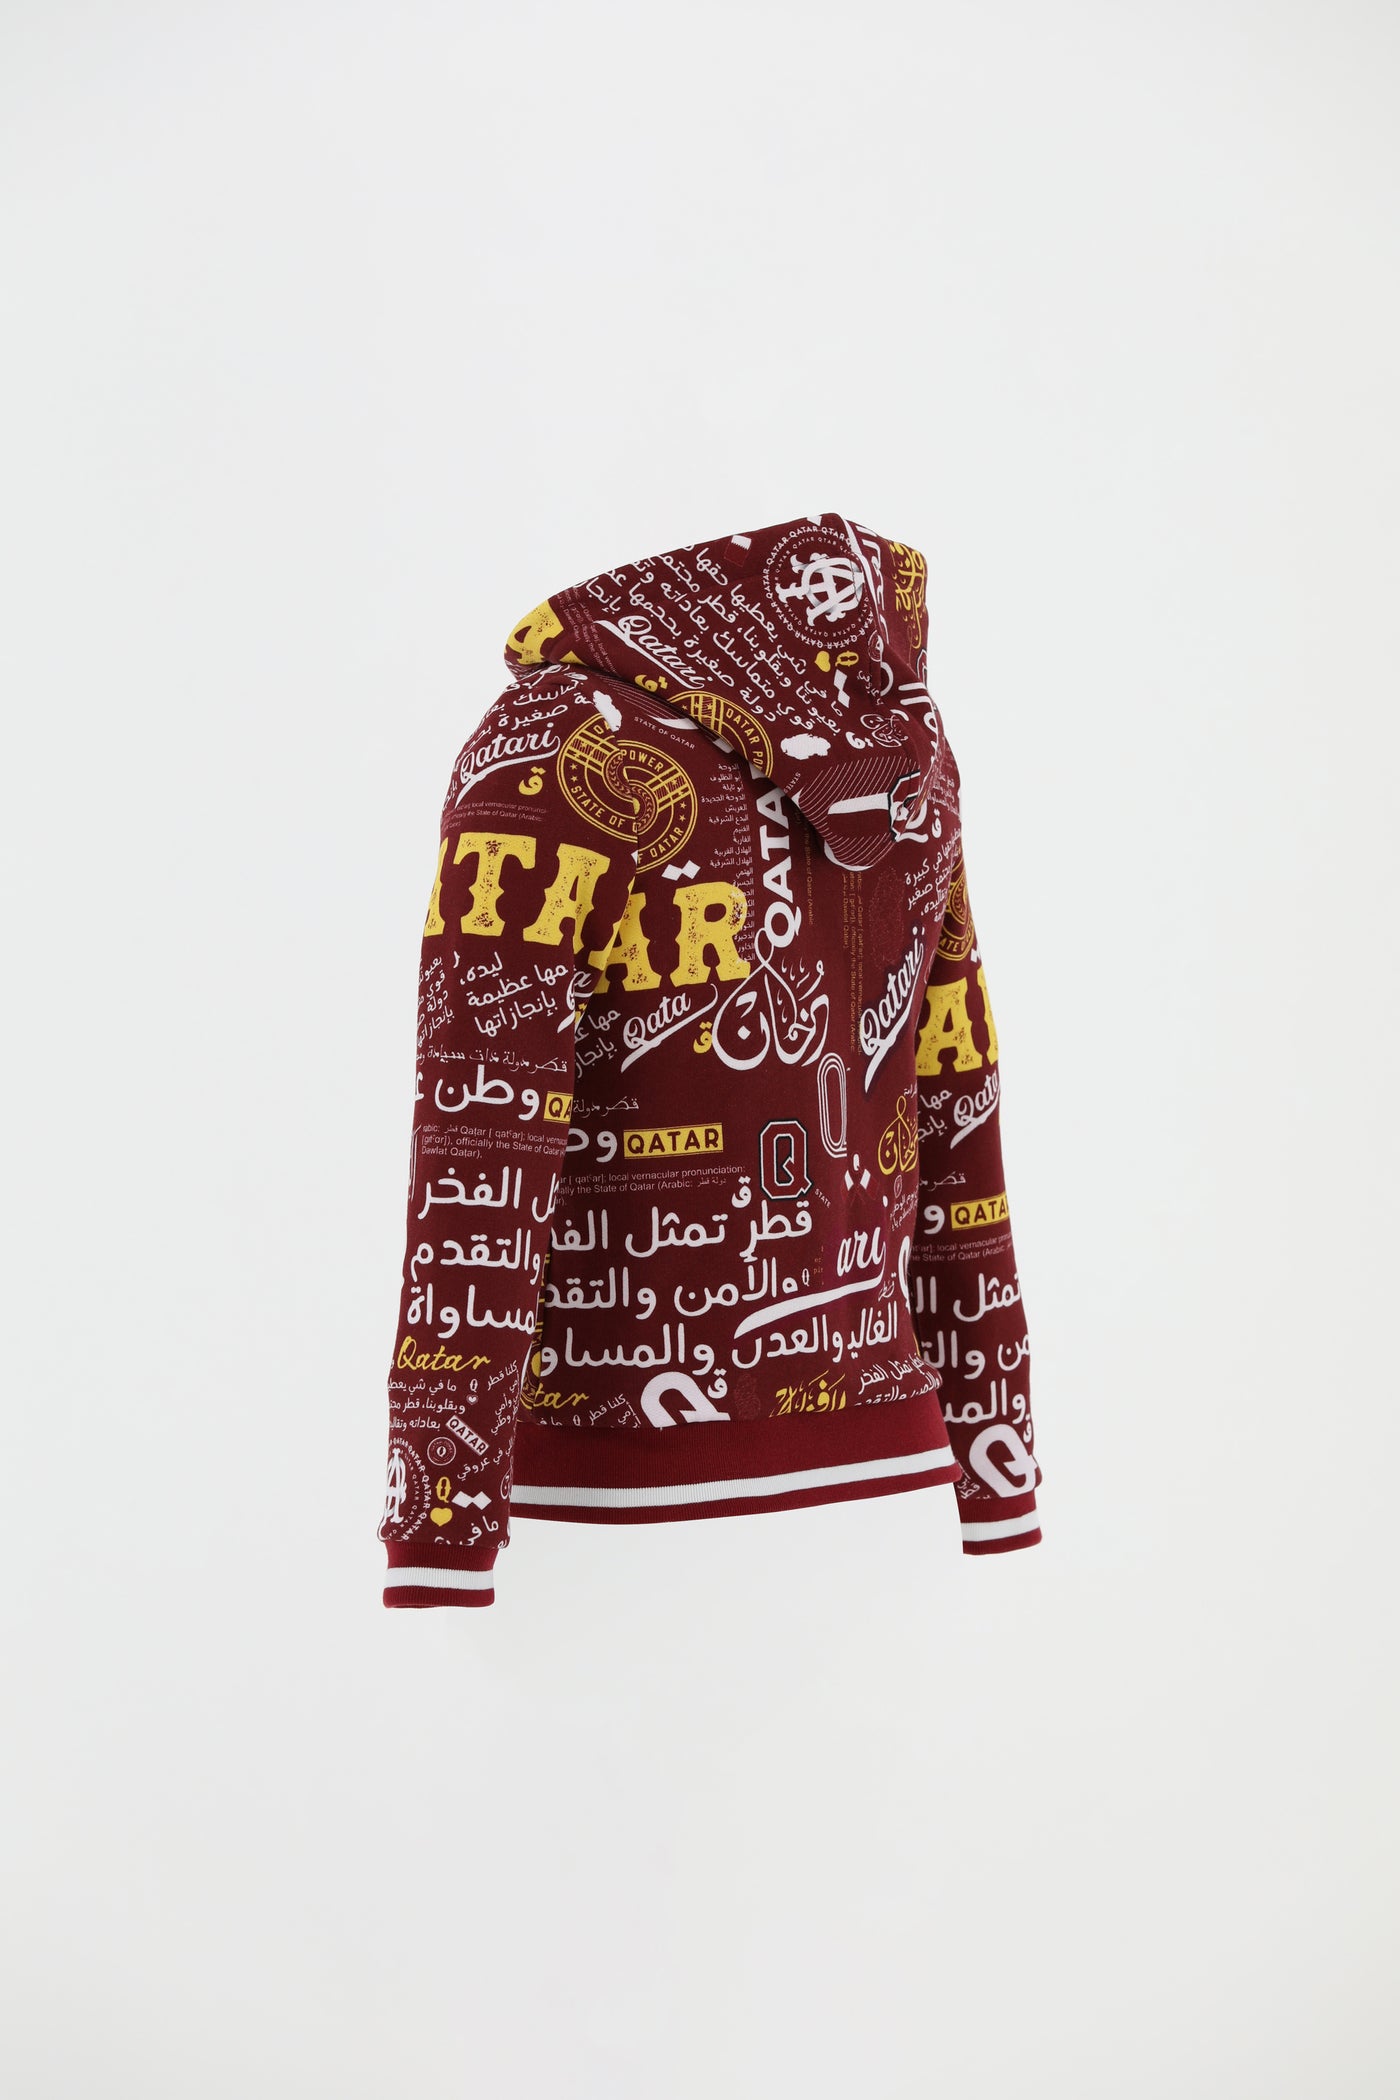 Qatari Pride all over print hooded Jacket 21NB-075